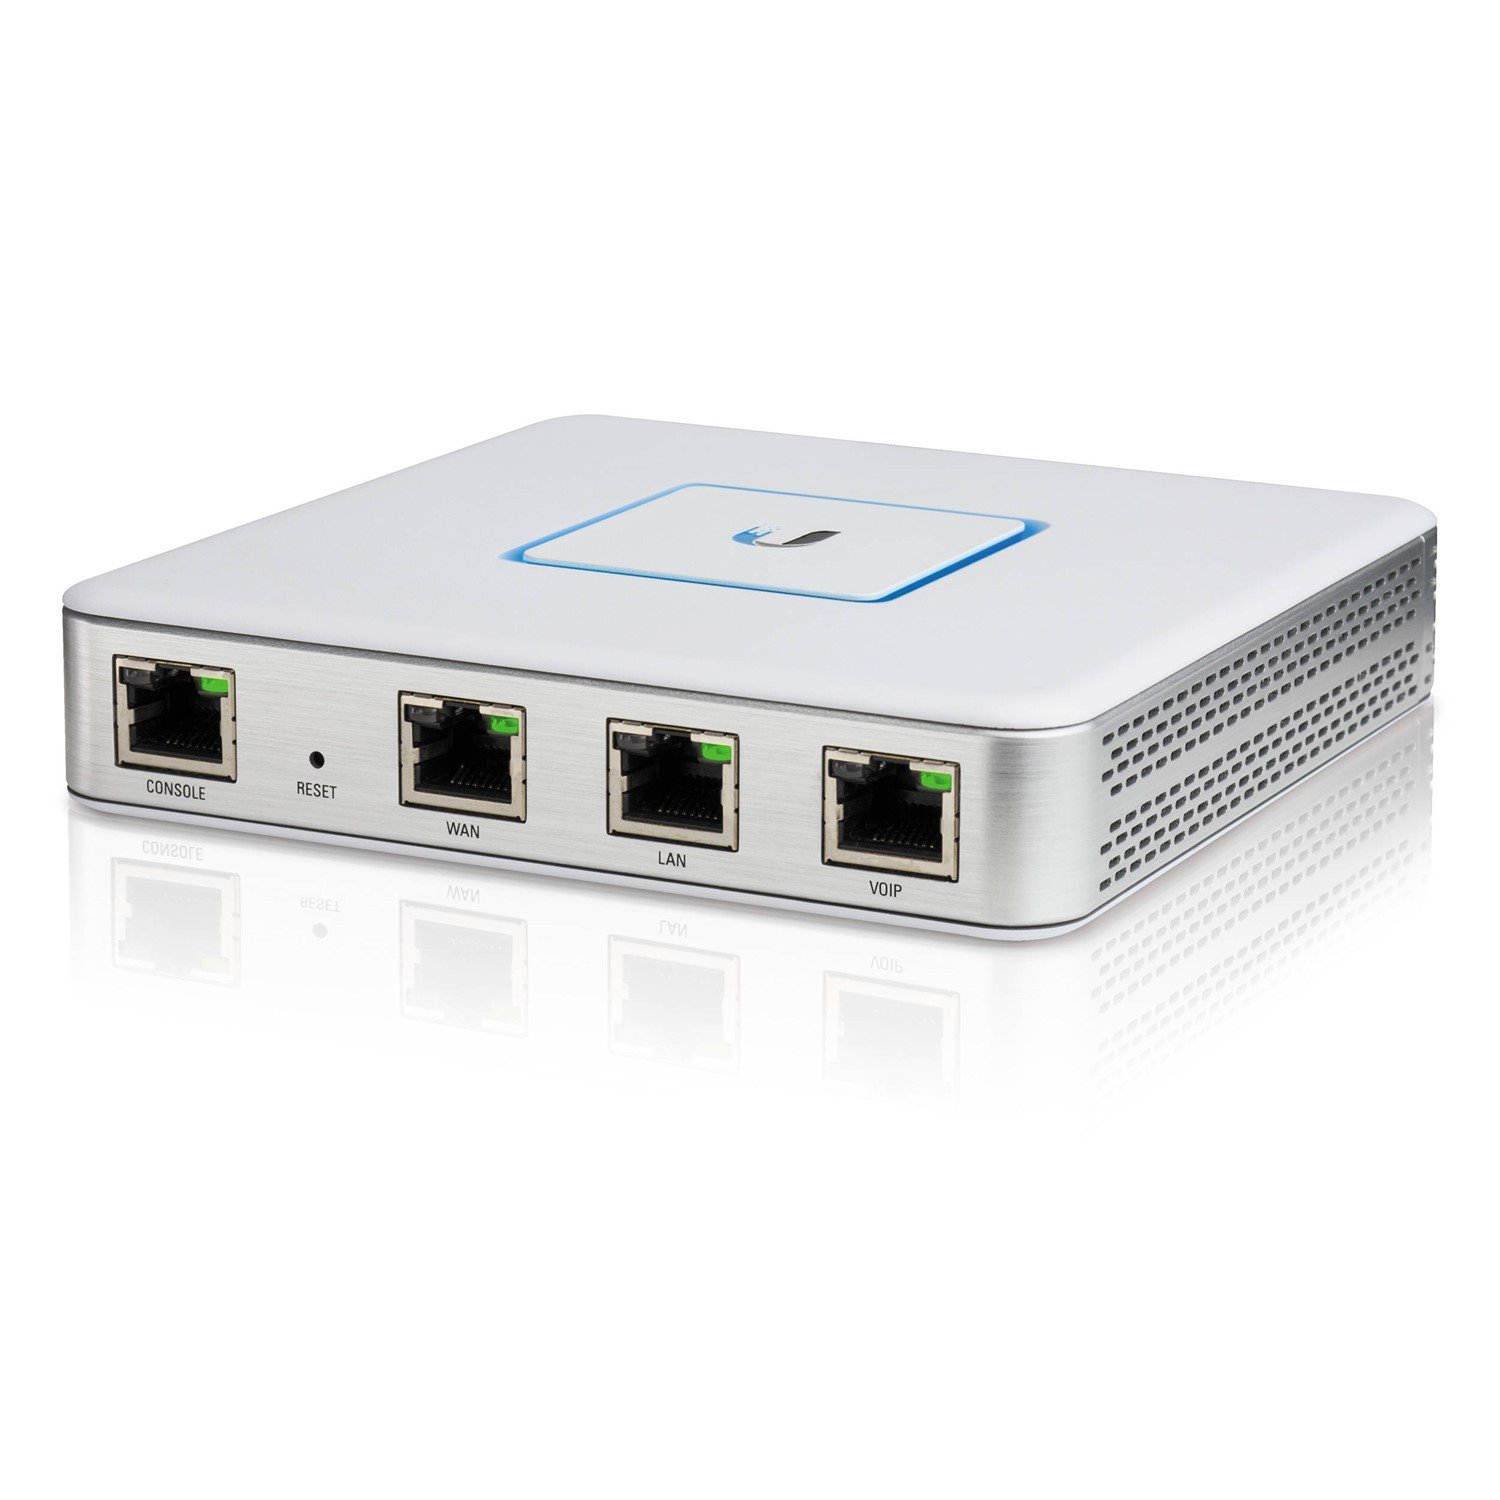 Ubiquiti UniFi Enterprise Gateway Router With Gigabit Ethernet